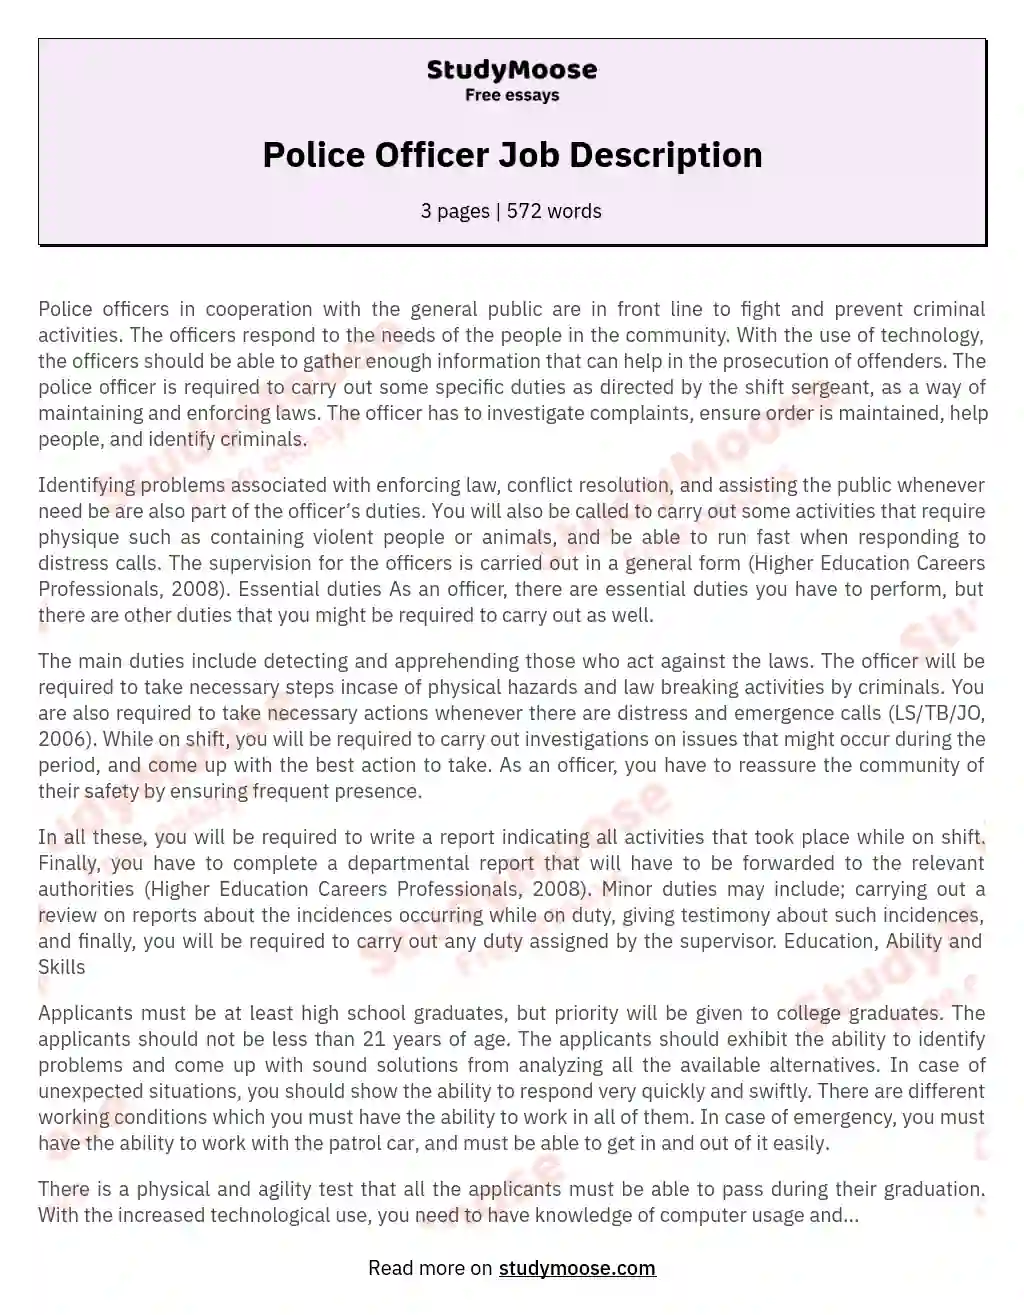 Police Officer Job Description